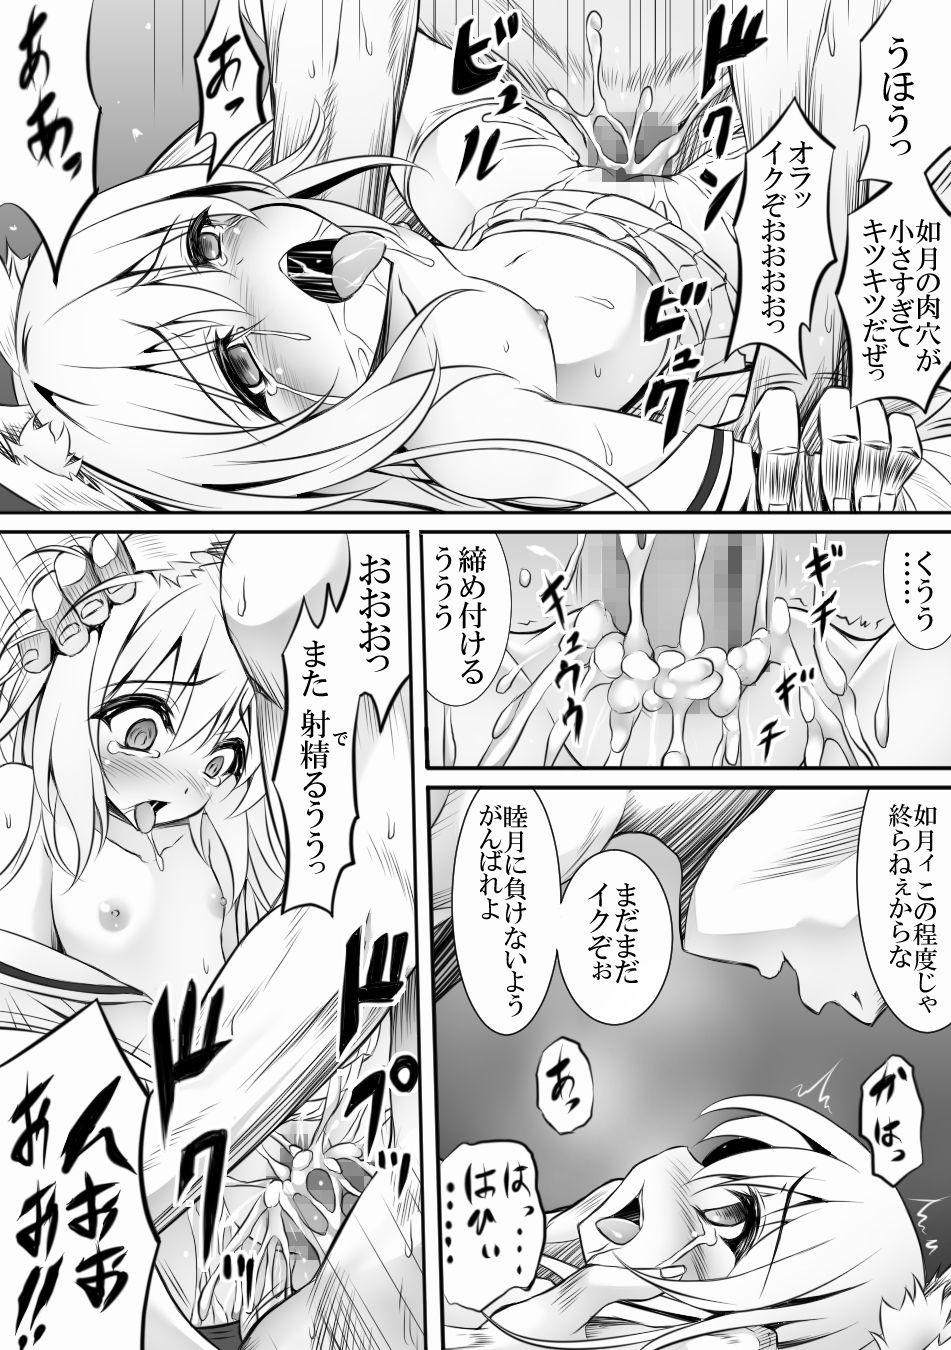 Cosplay AzuLan 1 Page Manga - Azur lane Pussy Play - Picture 1